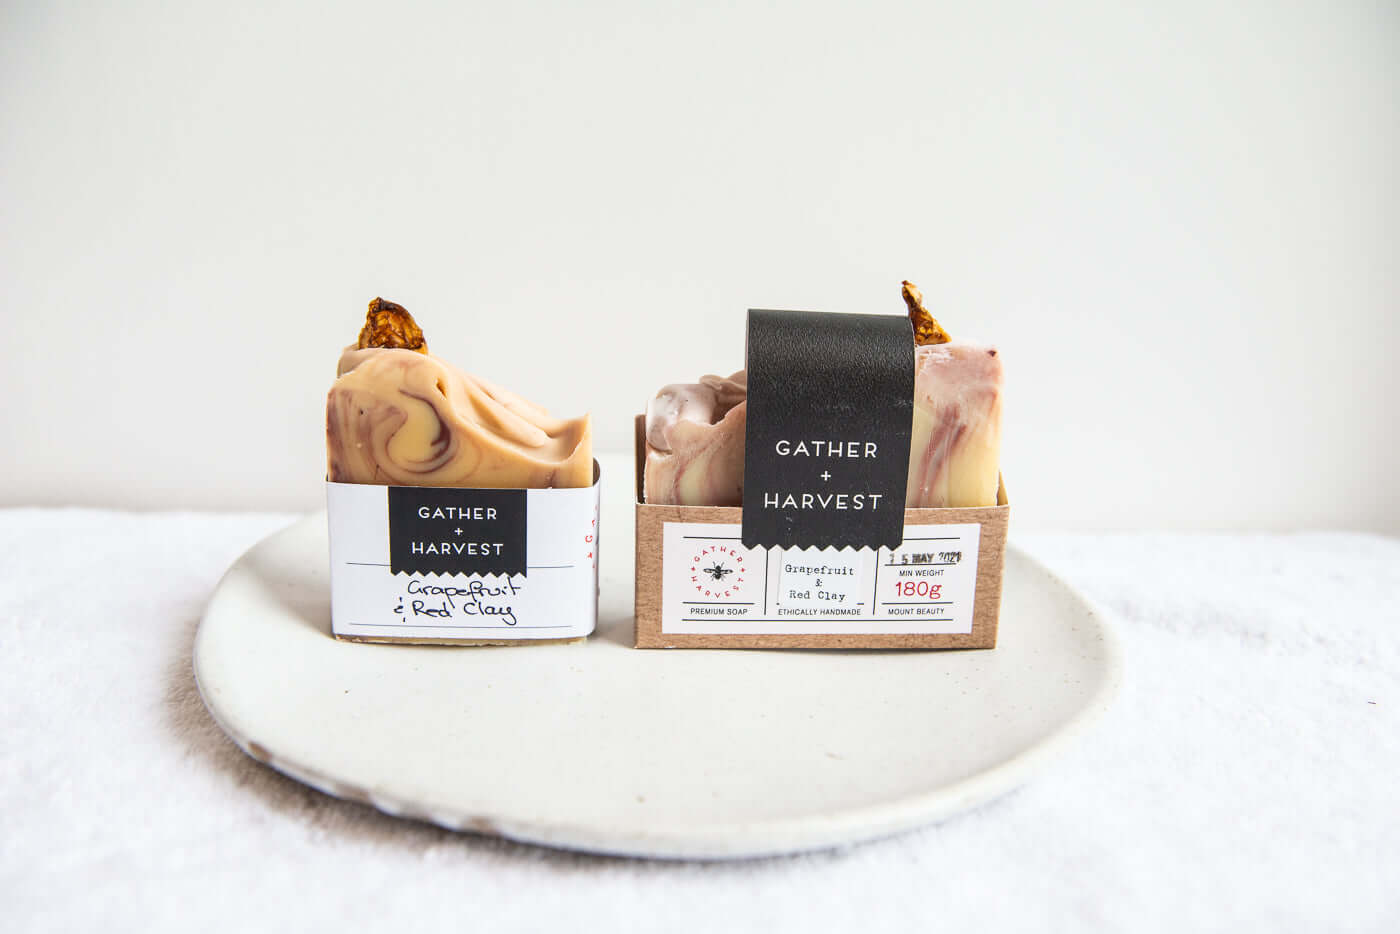 Natural Soap | Handmade in Australia | Gather + Harvest | Grapefruit & Australian Pink Clay Soap | Buy online